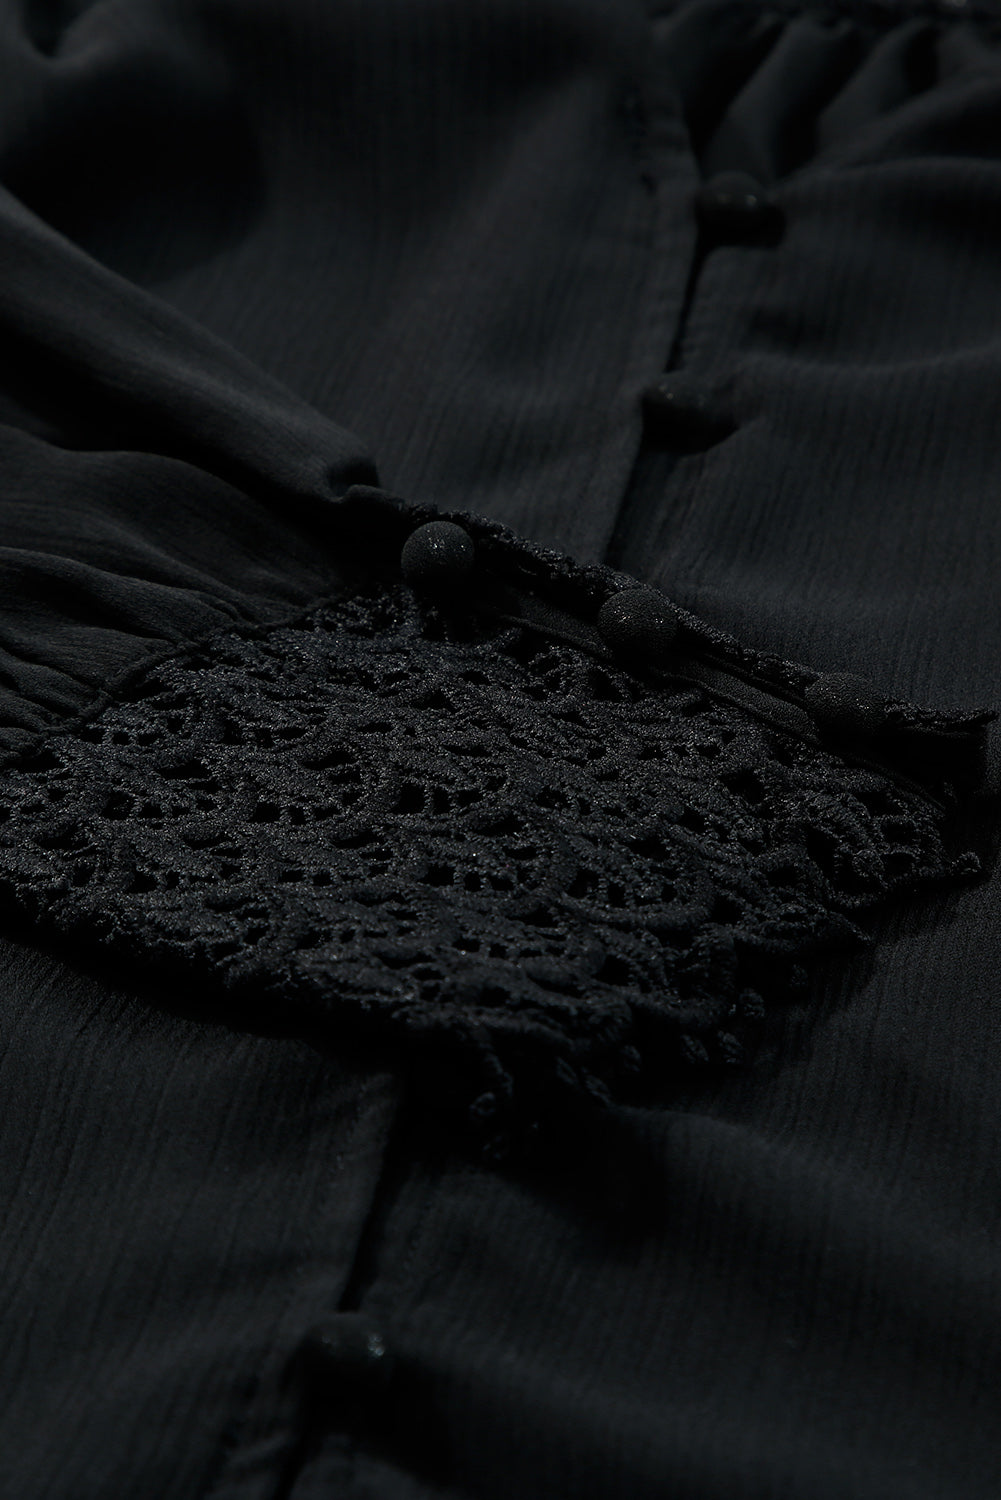 Black Crochet Lace Splice Buttoned Shirt